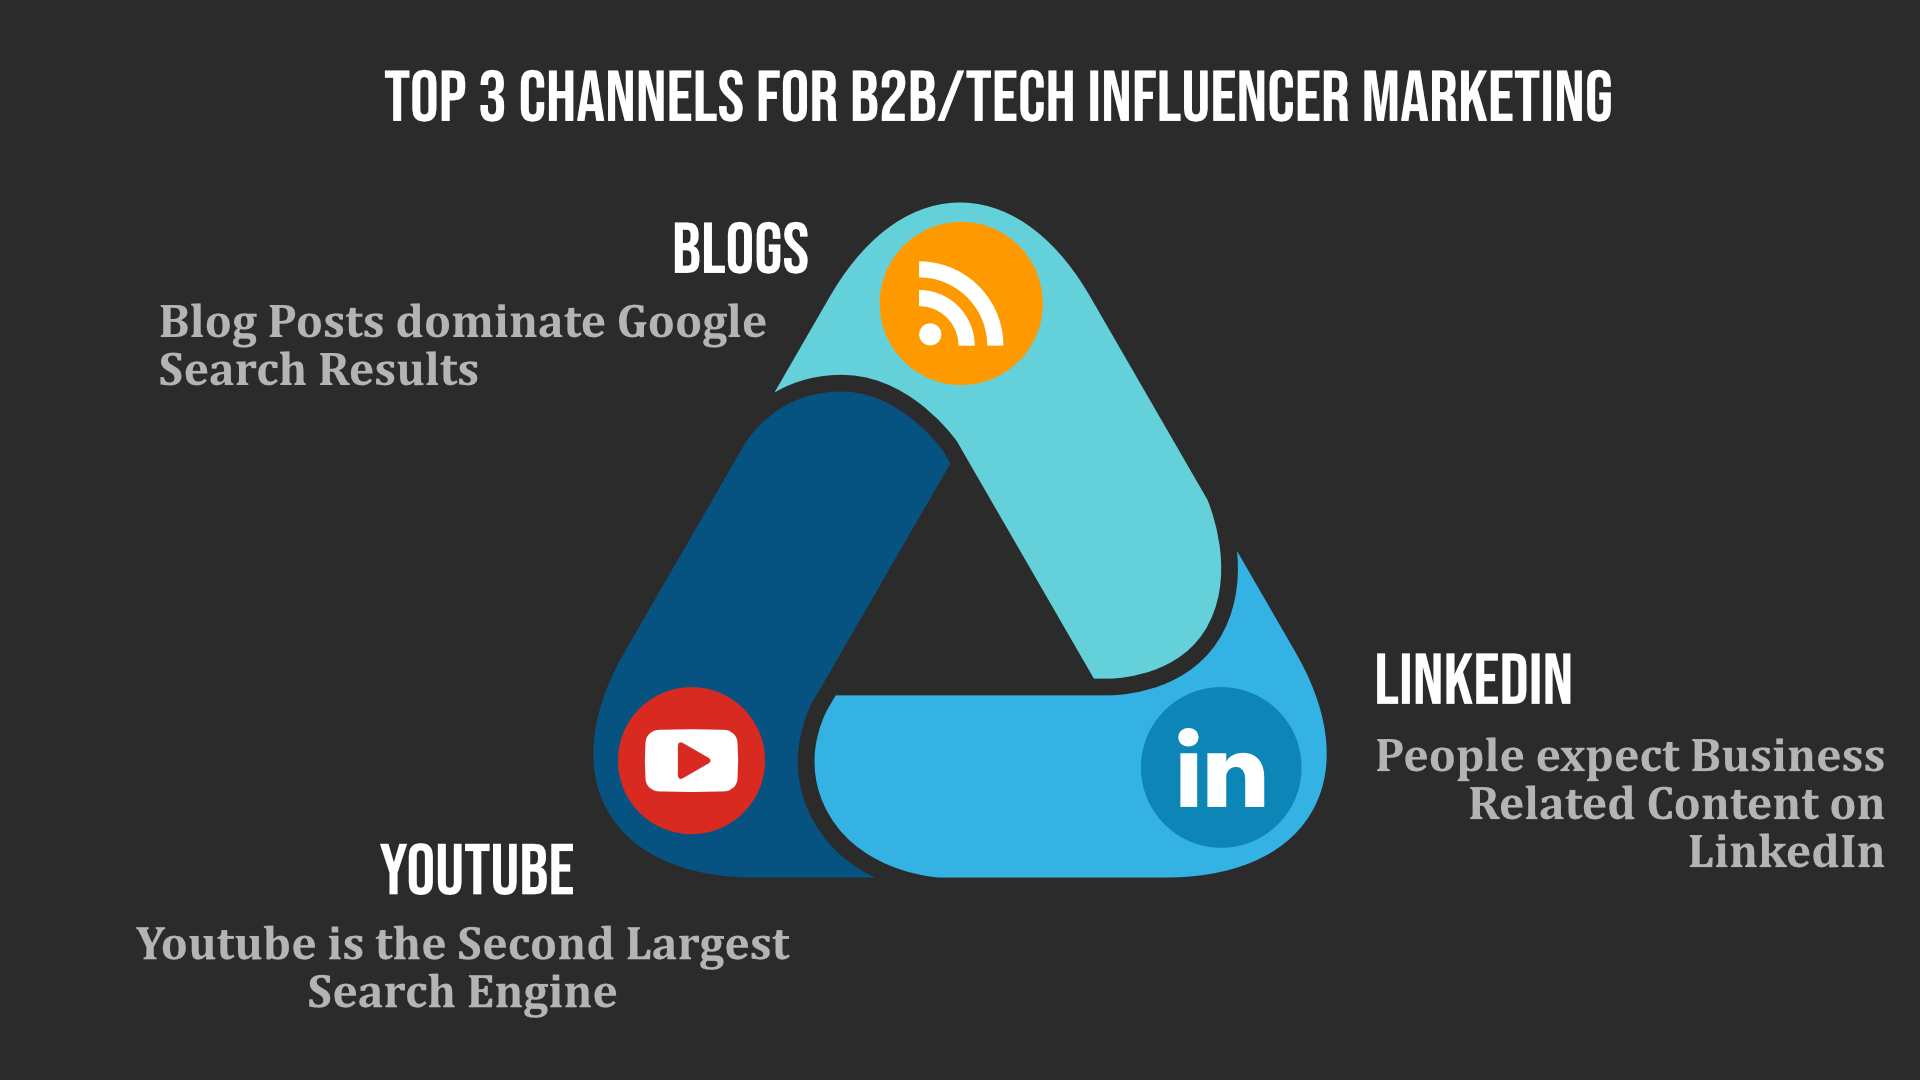 Tech & B2B Influencer Marketing: Top 3 Channels [Blogs, LinkedIn & Youtube]